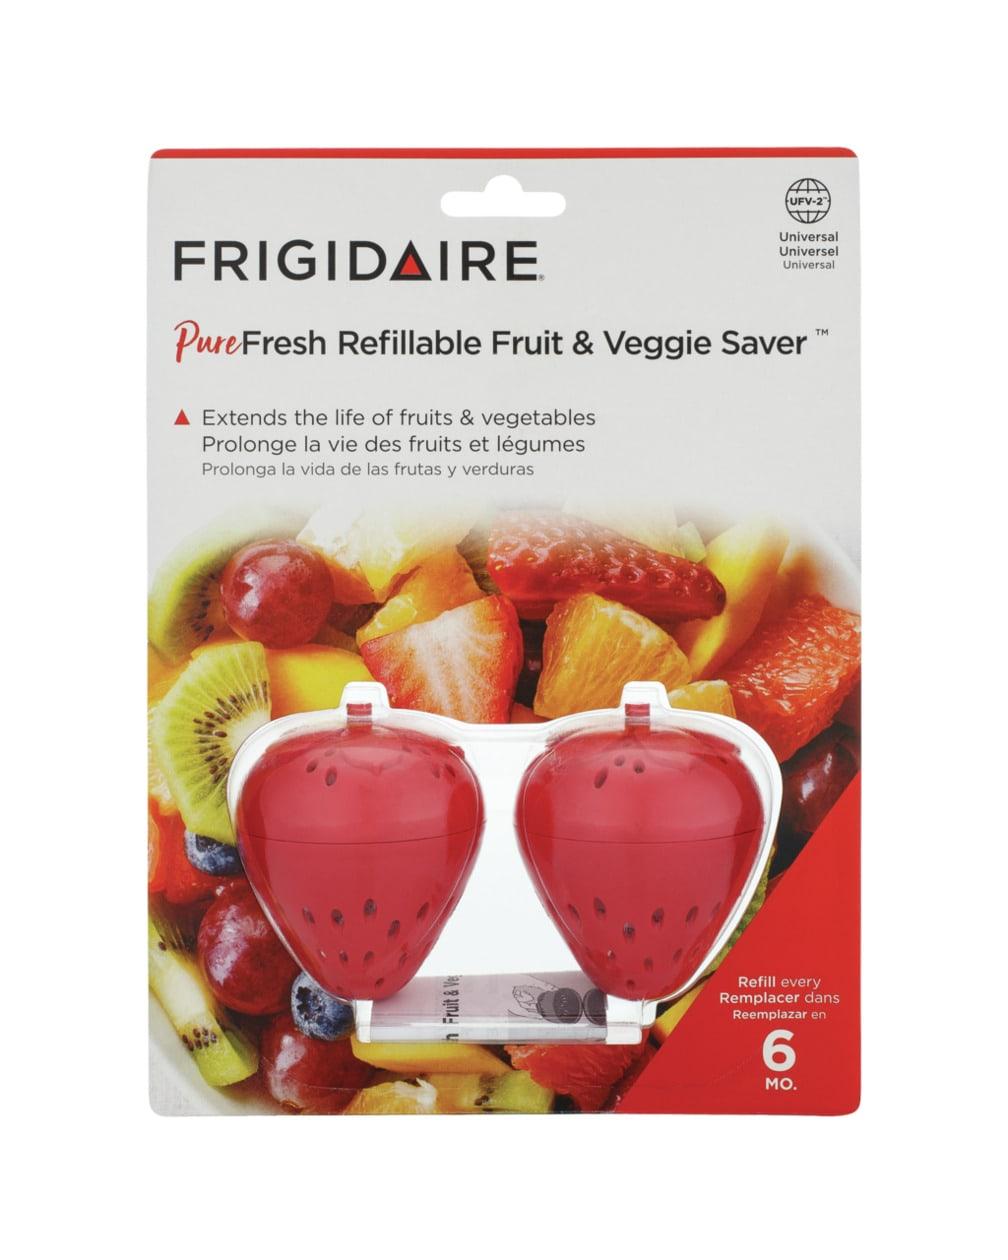 Frigidaire PureFresh Refillable Fruit and Veggie Saver™